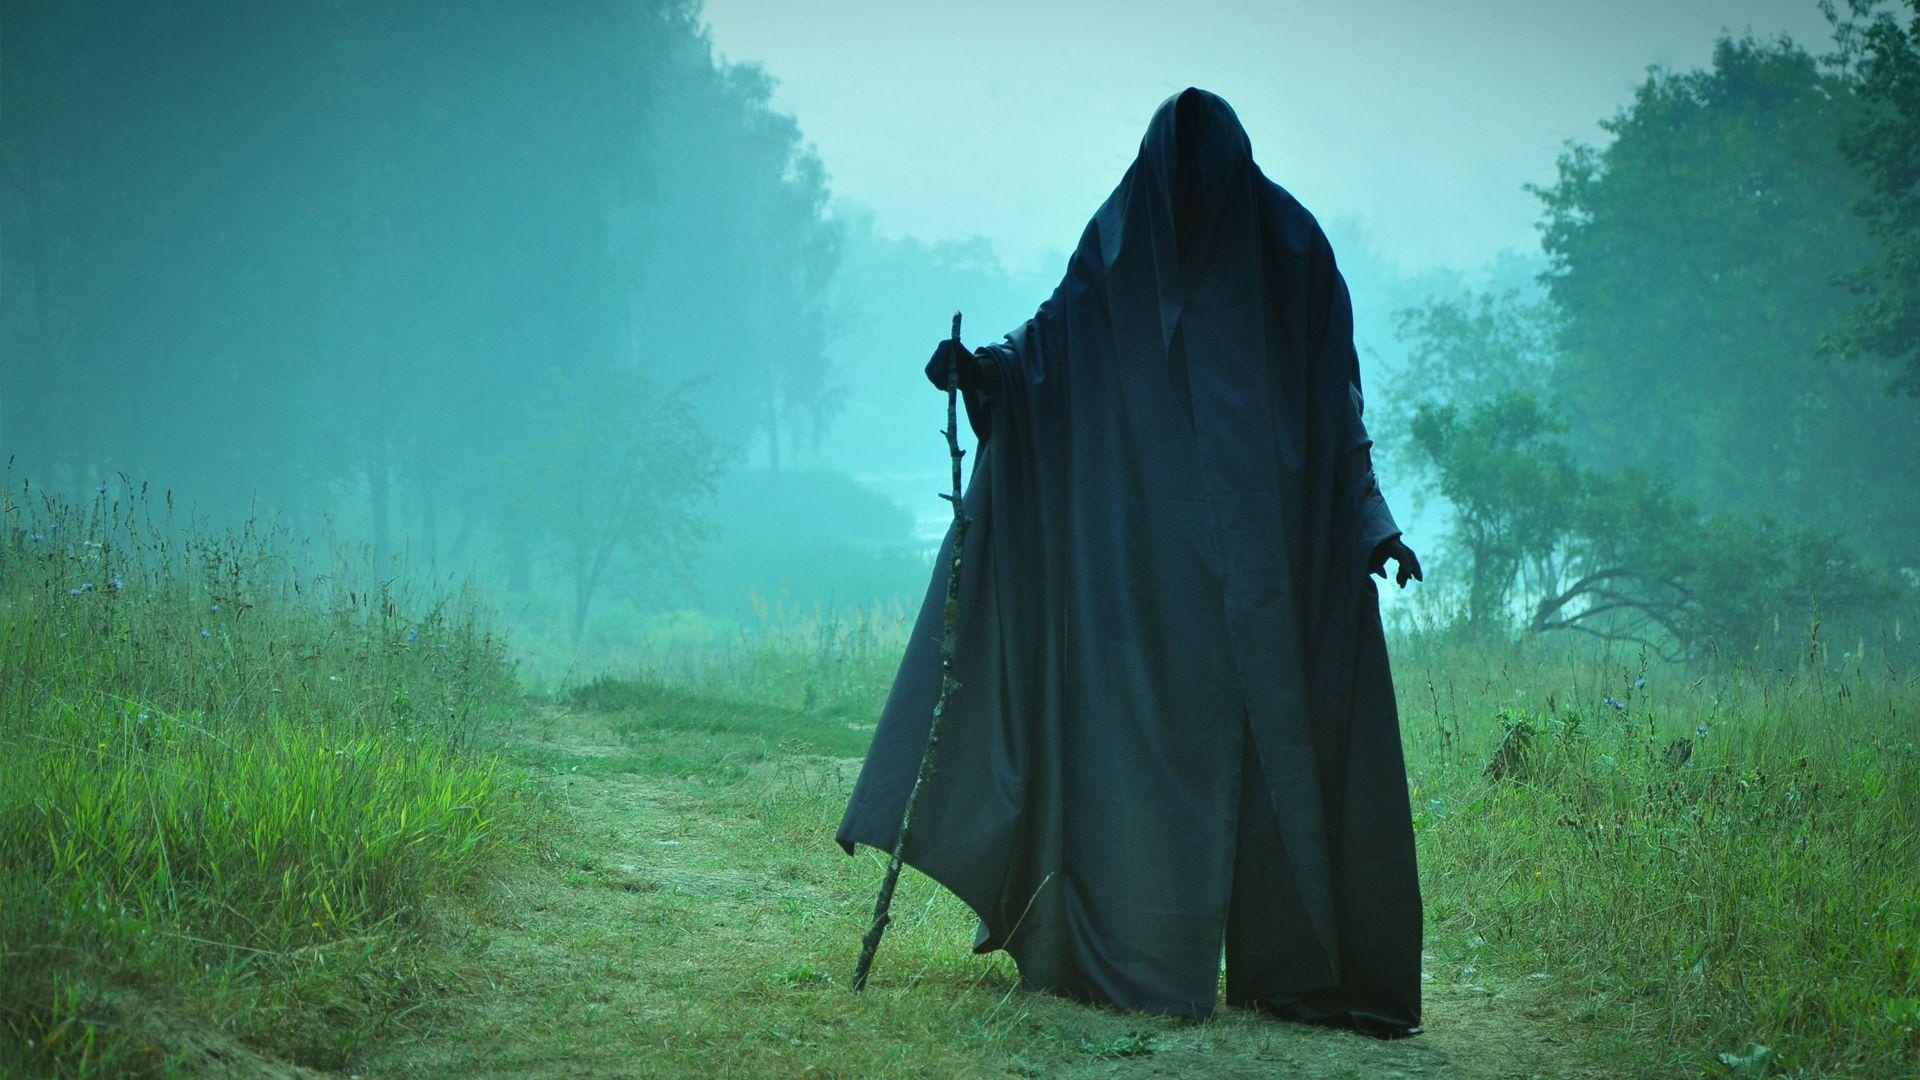 Dark horror grim reaper gothic death landscapes mood spirits ghost